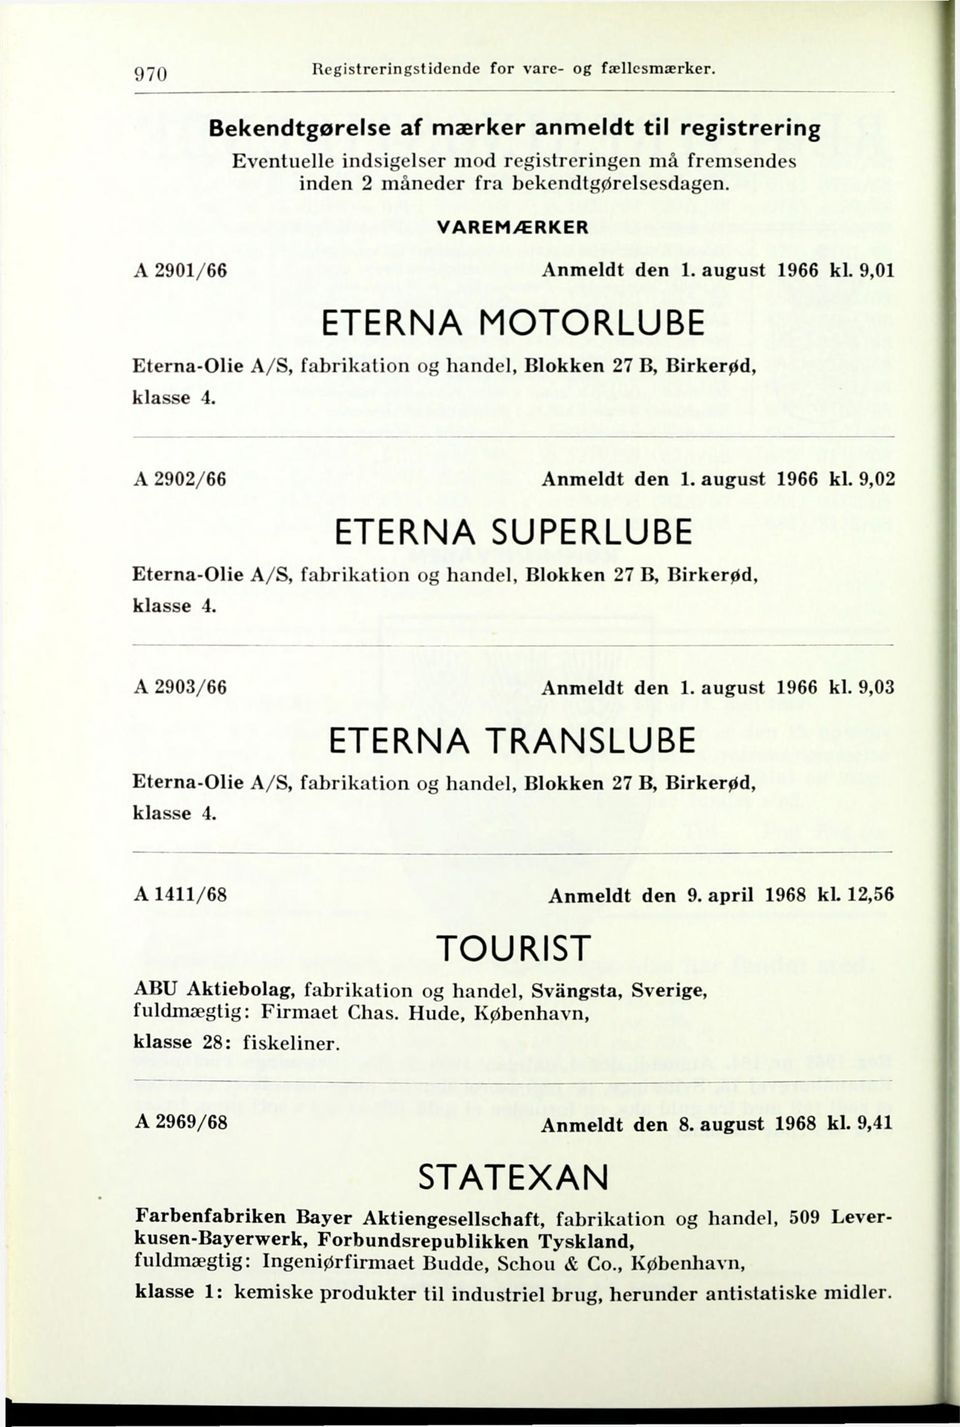 A 2903/66 Anmeldt den 1. august 1966 kl. 9,03 ETERNA TRANSLUBE Eterna-Olie A/S, fabrikation og handel. Blokken 27 B, Birkerød, klasse 4. A 1411/68 Anmeldt den 9. april 1968 kl.